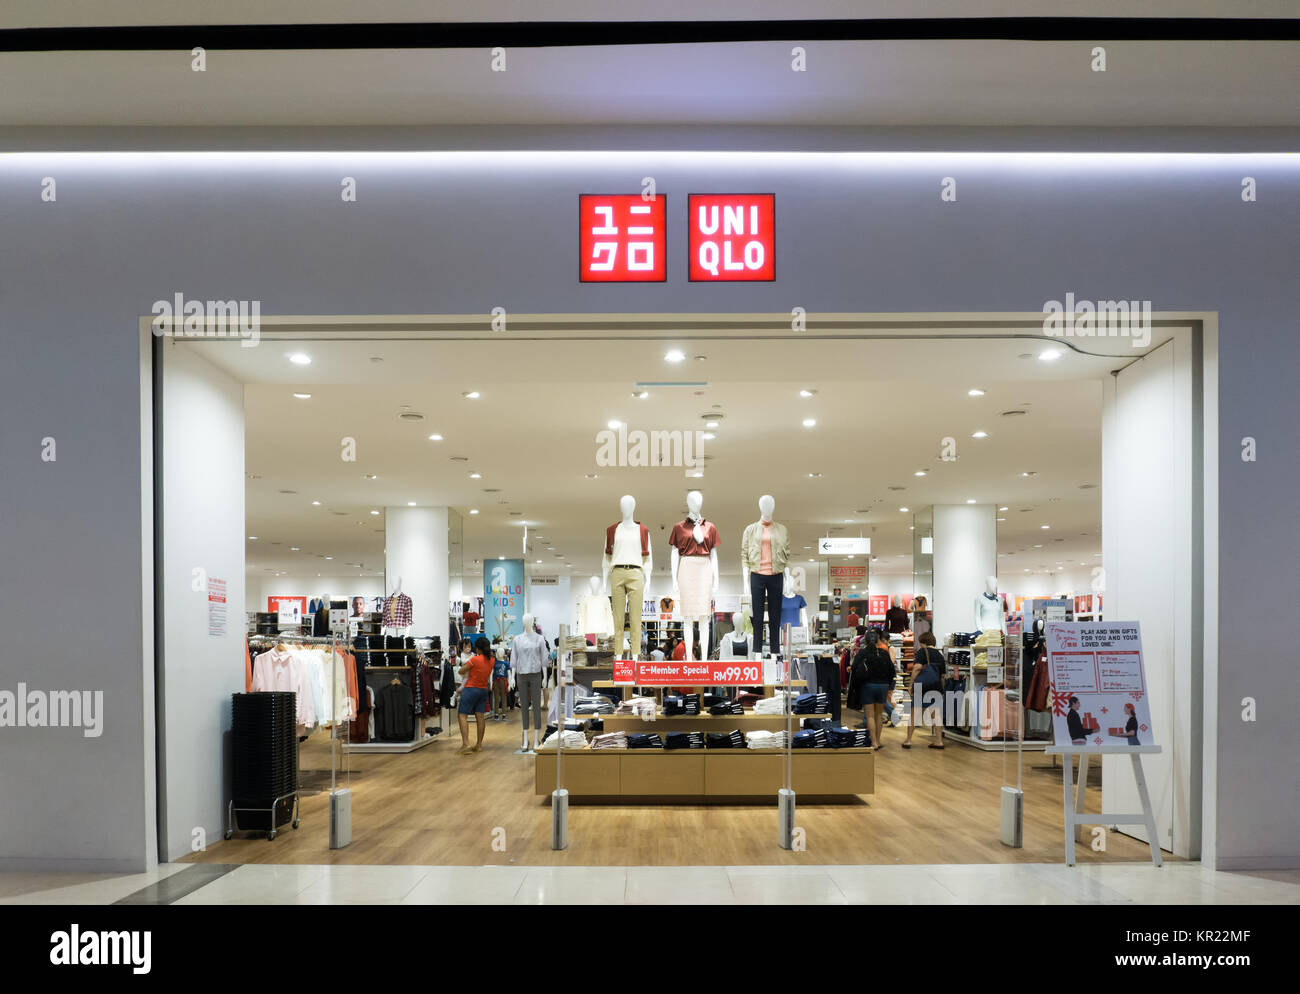 Kota Kinabalu, Malaysia - Dezember 14, 2017: Uniqlo store in Imago Shopping Mall. Uniqlo Co., Ltd. ist ein japanisches Casual Wear Designer, Hersteller und Stockfoto